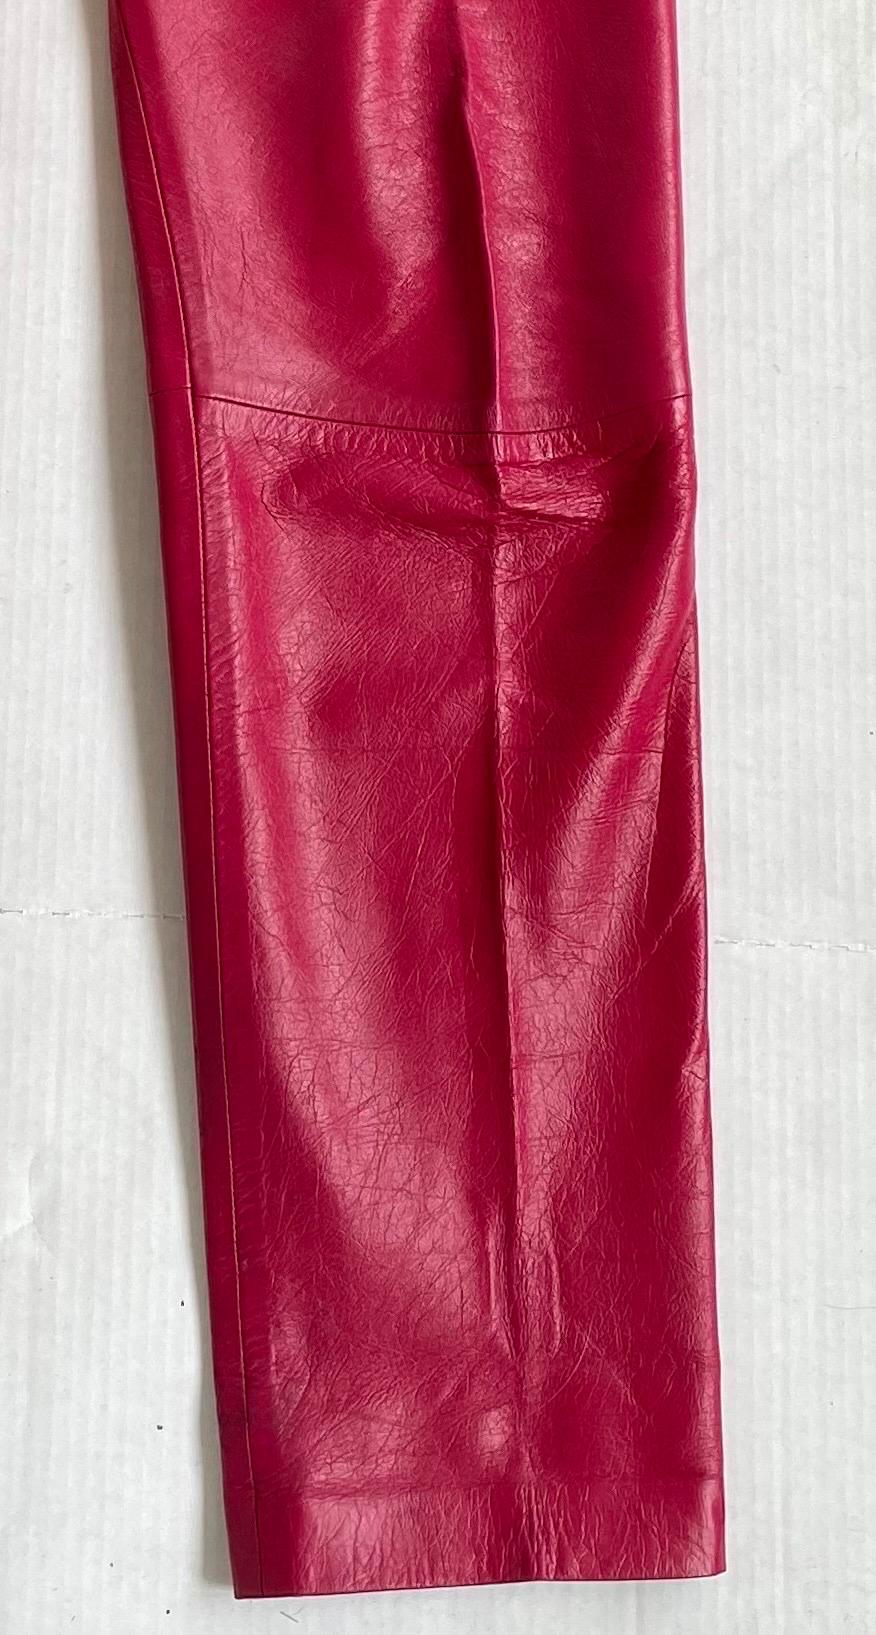 margiela leather pants